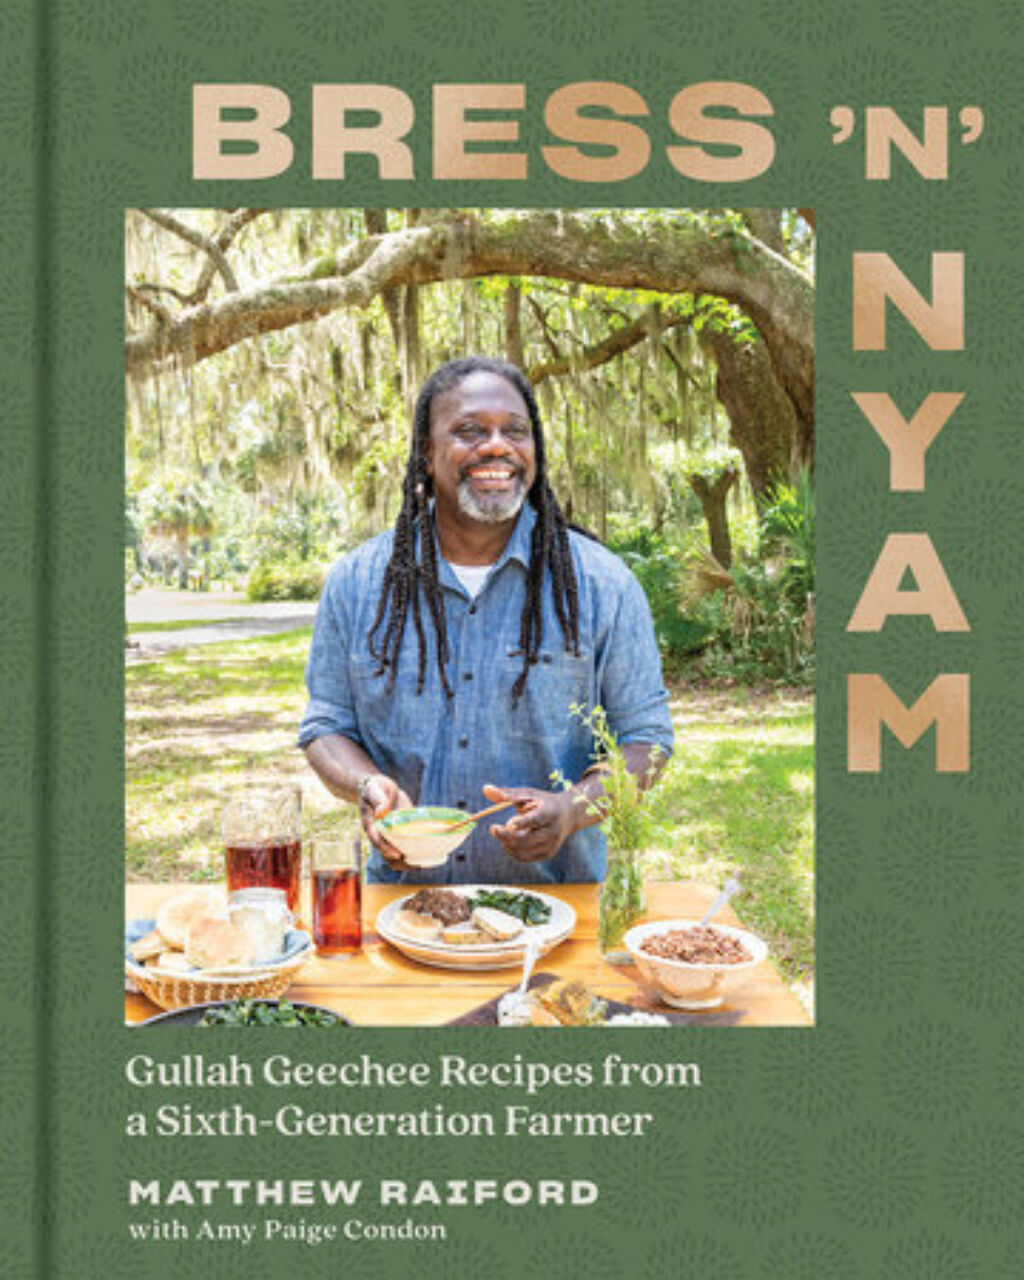 Book cover of Bress 'N' Nyam, written by Matthew Raiford